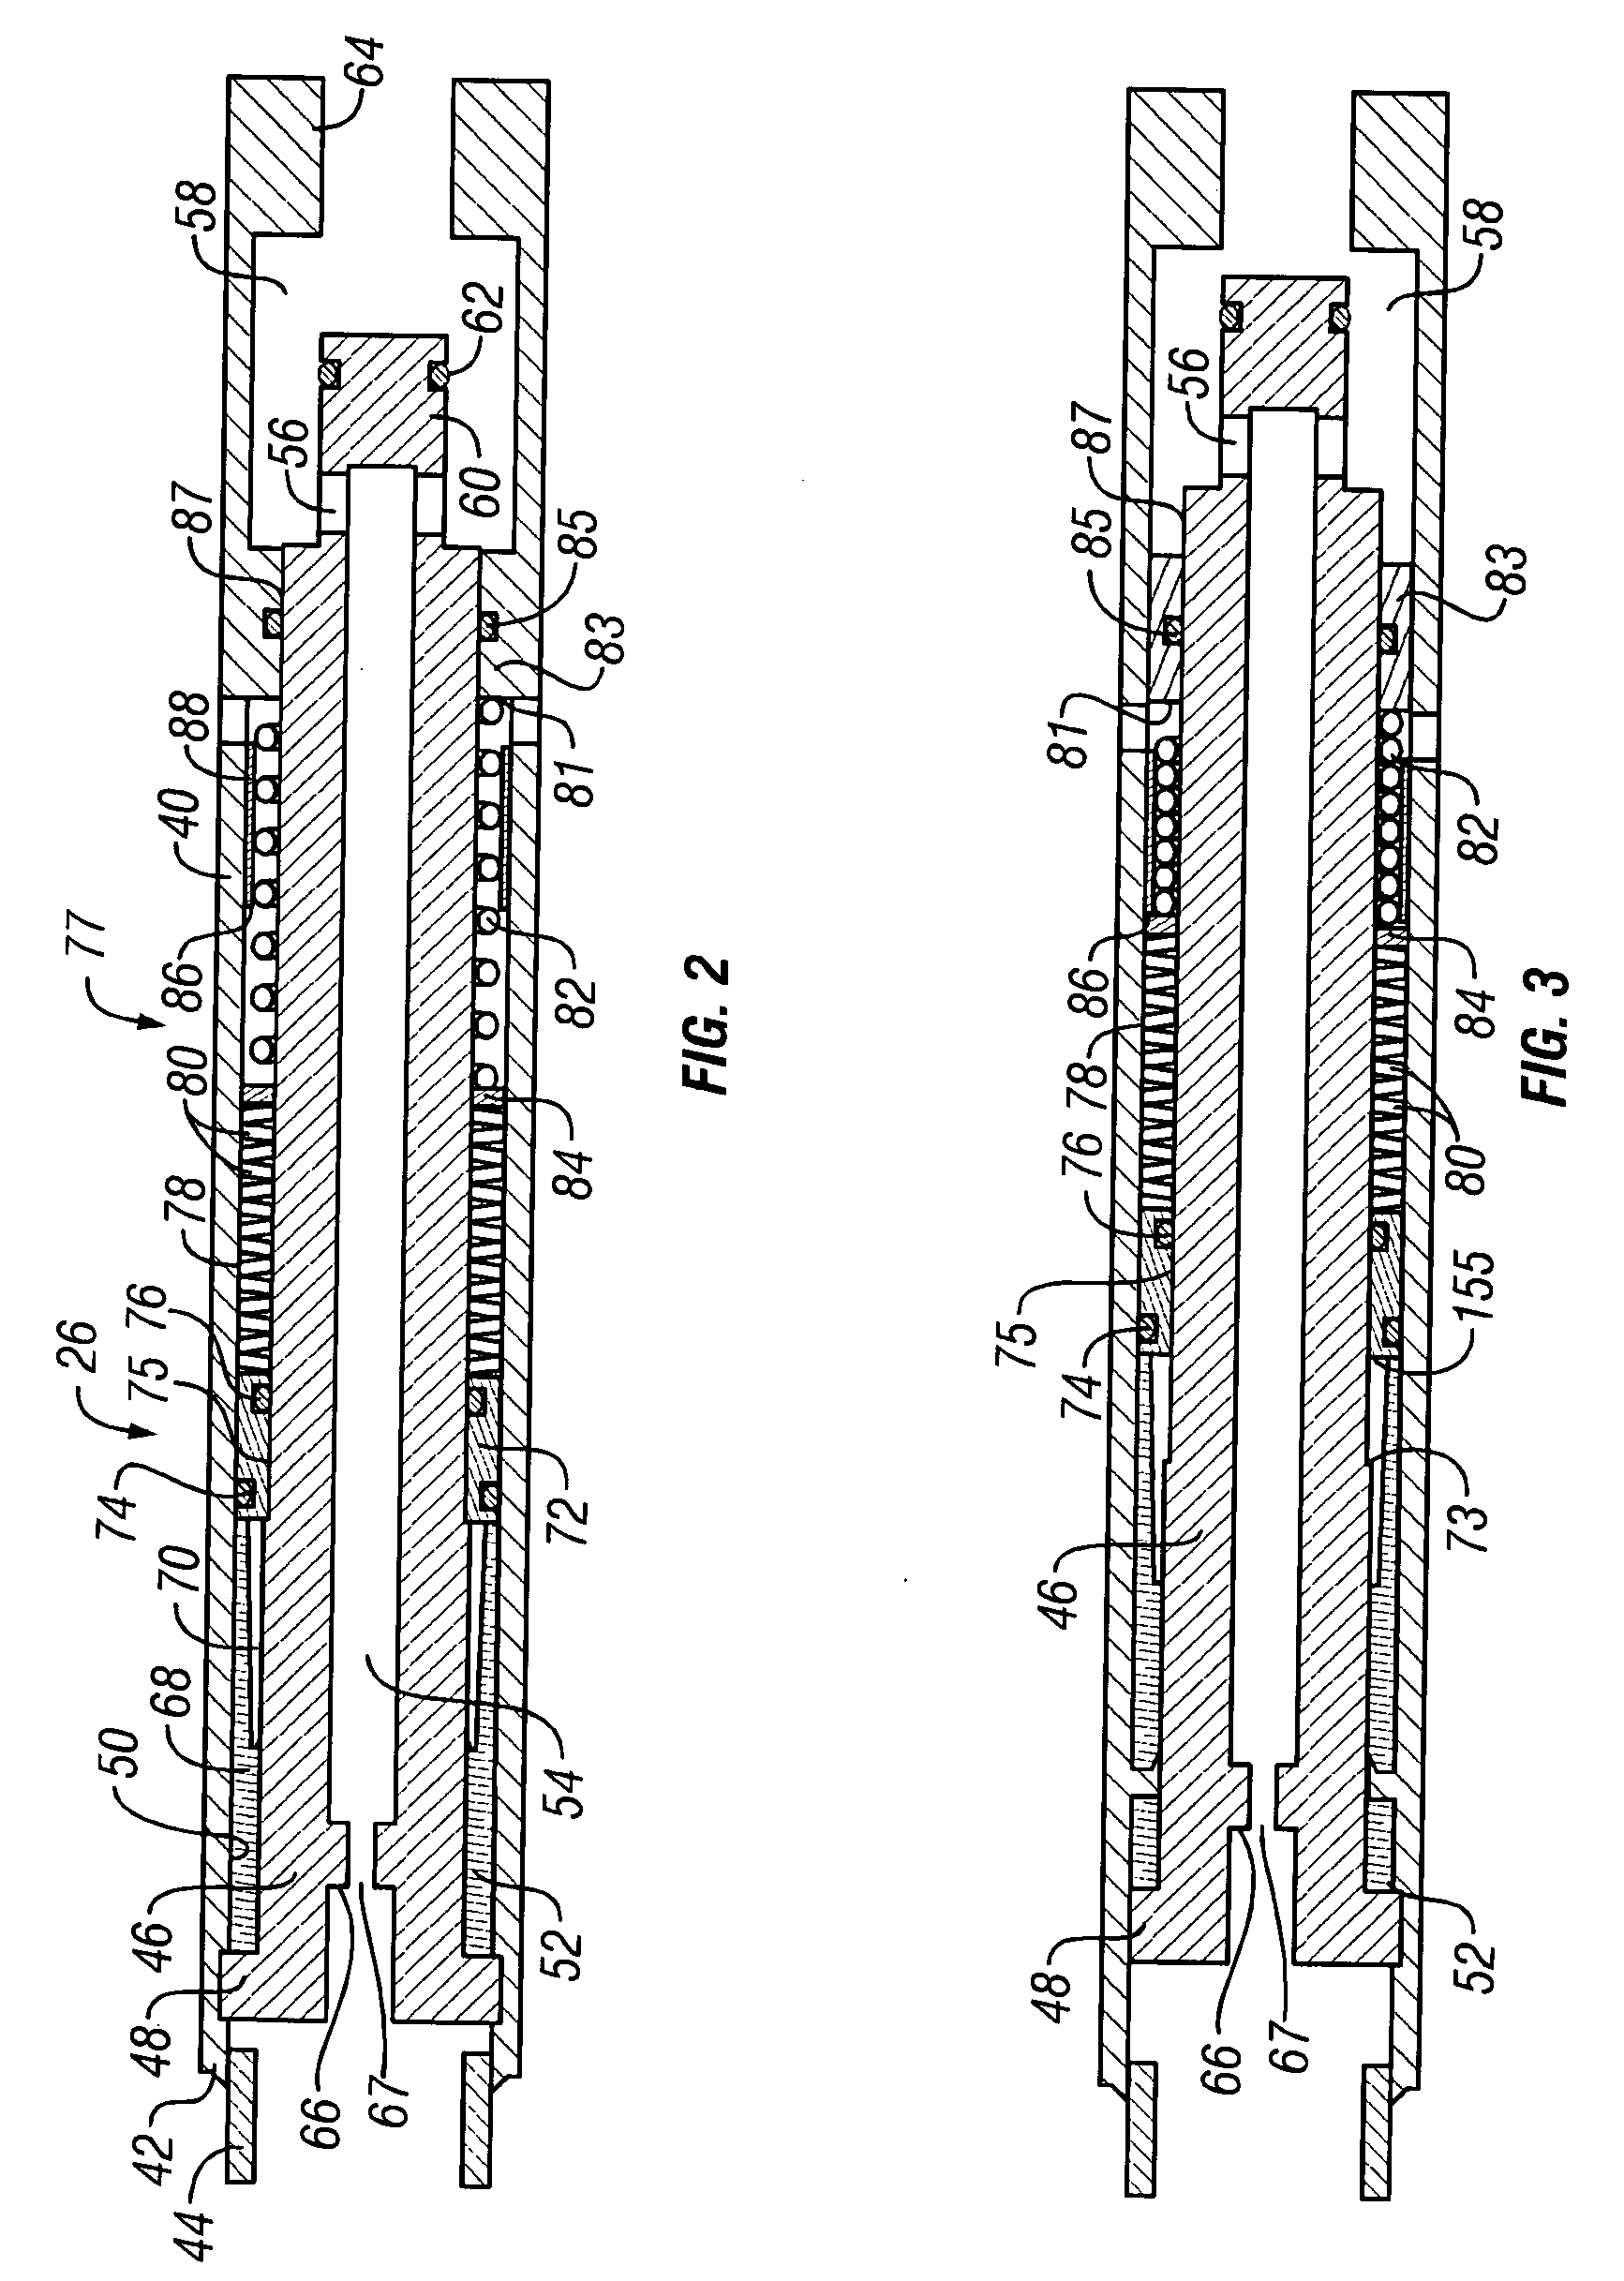 Multi-cycle dump valve